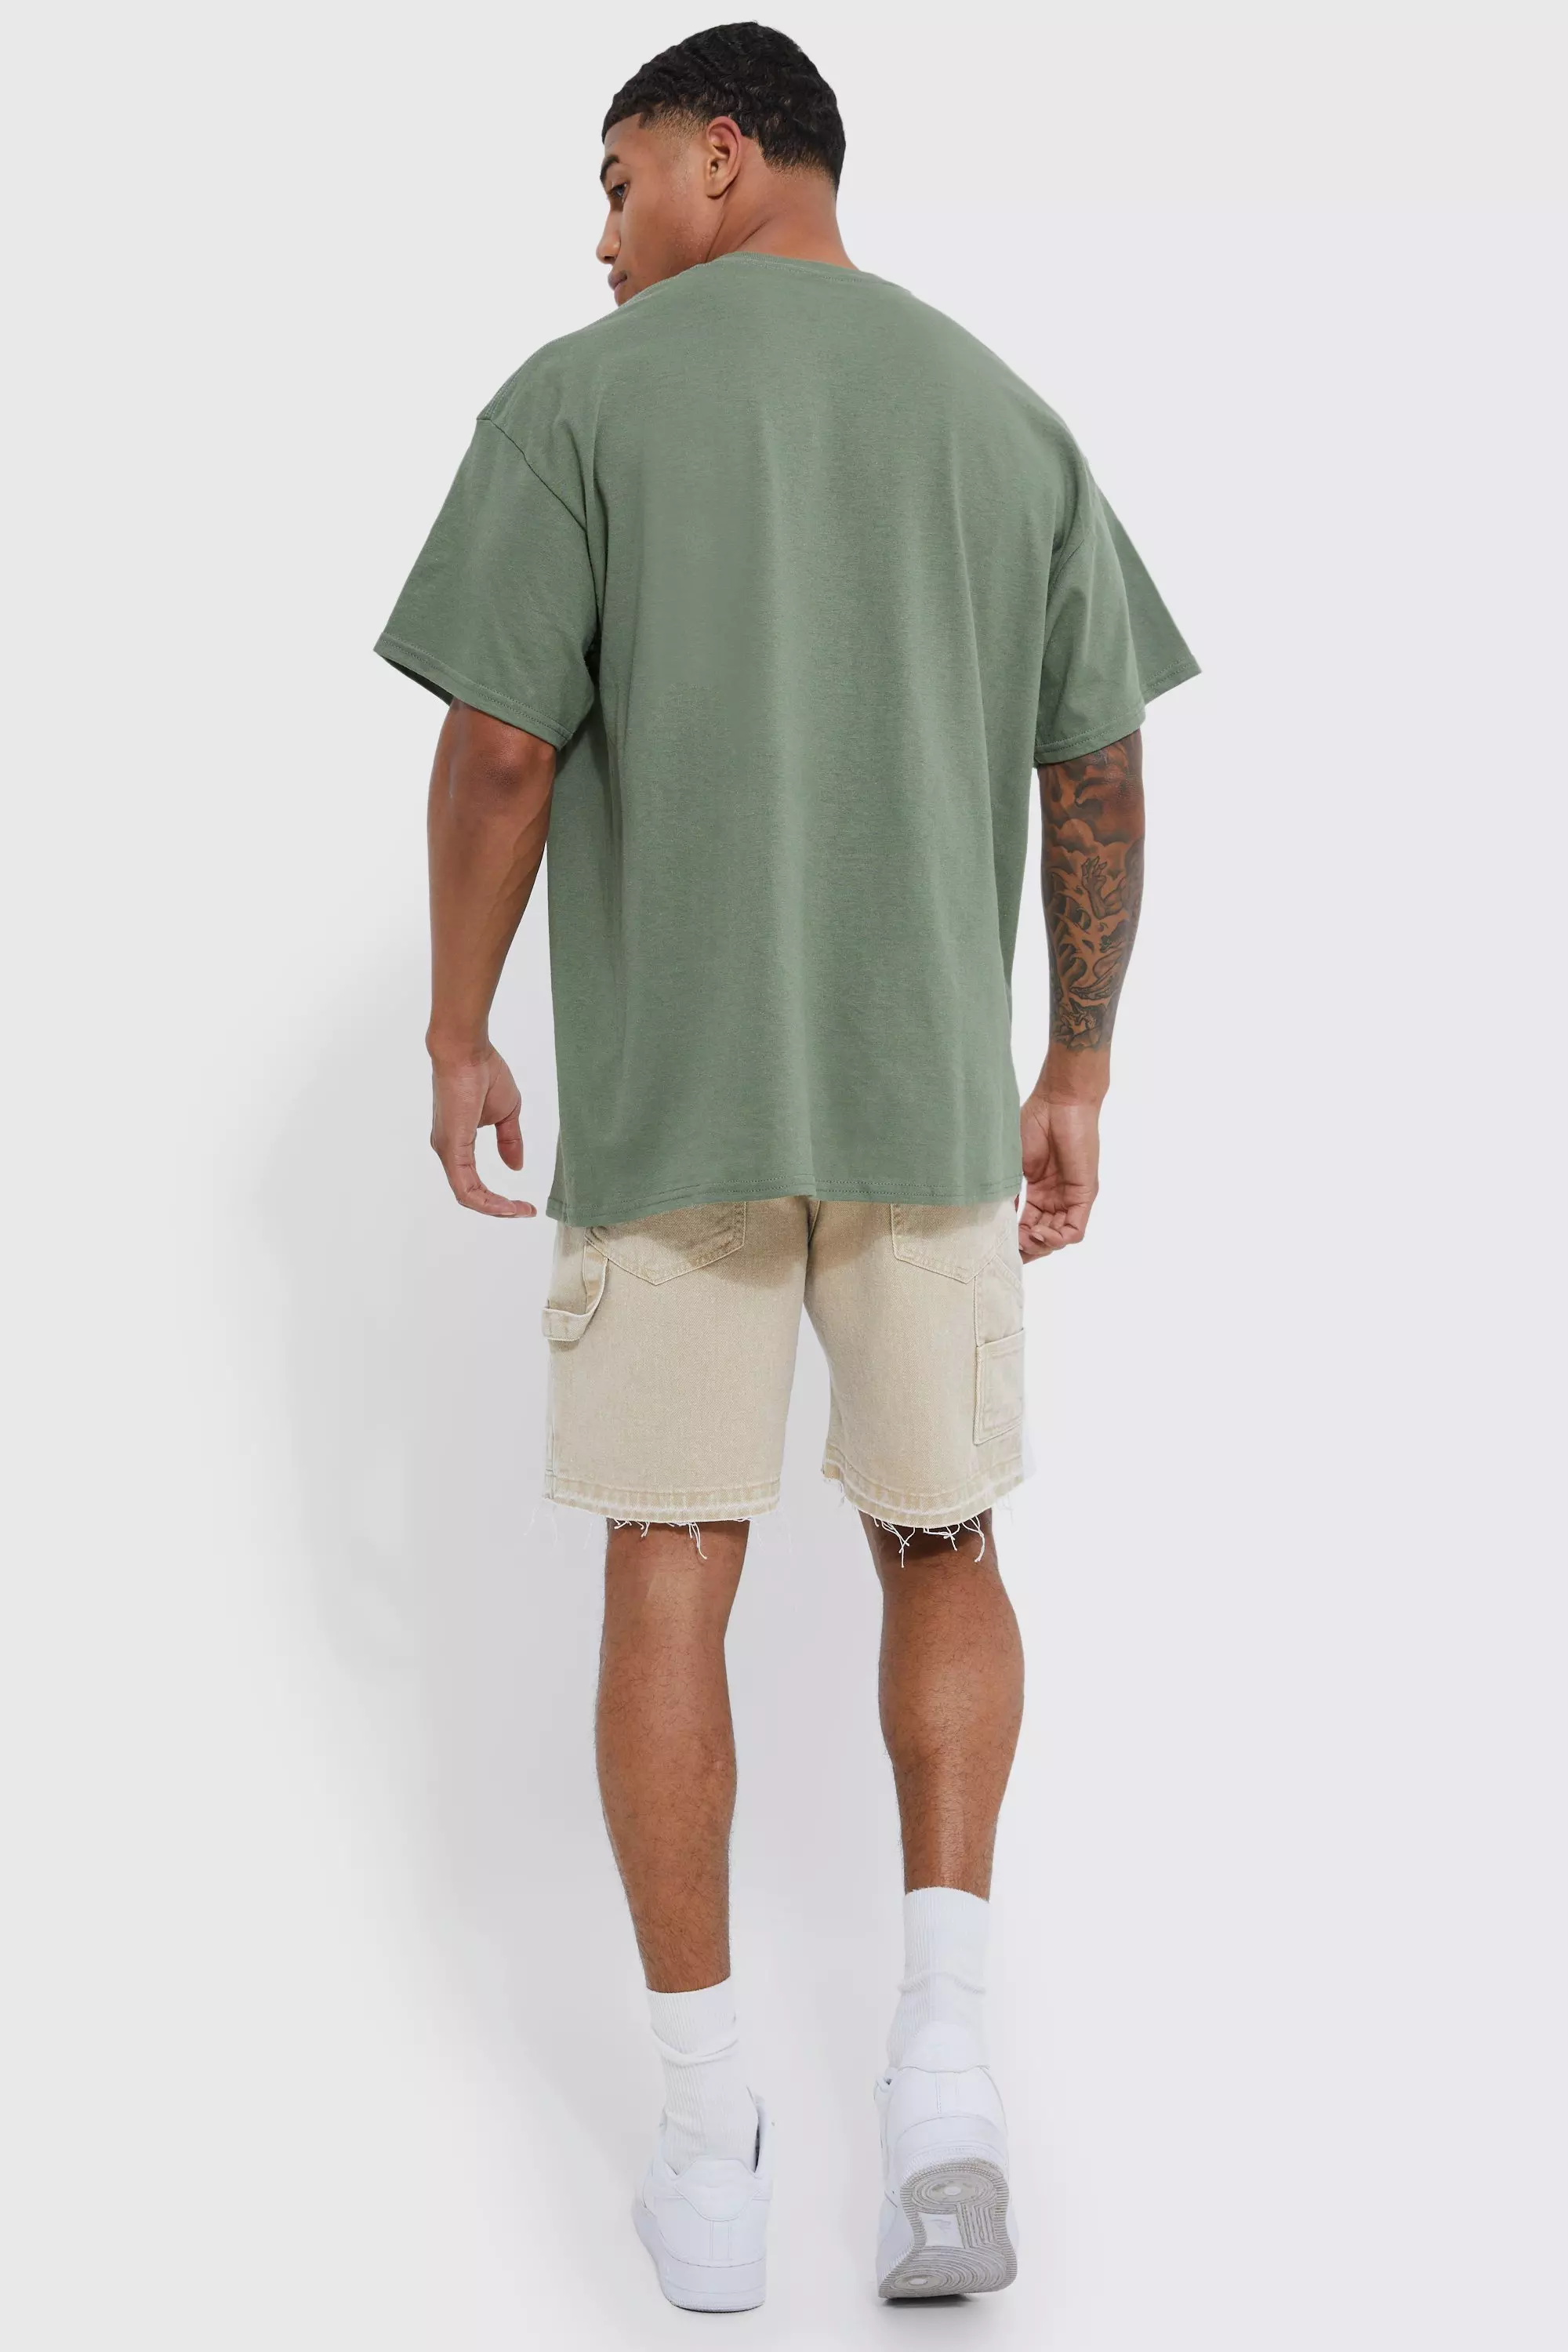 Men's Grunge Butterfly Print Short Sleeve T Shirt Oversized Gothic